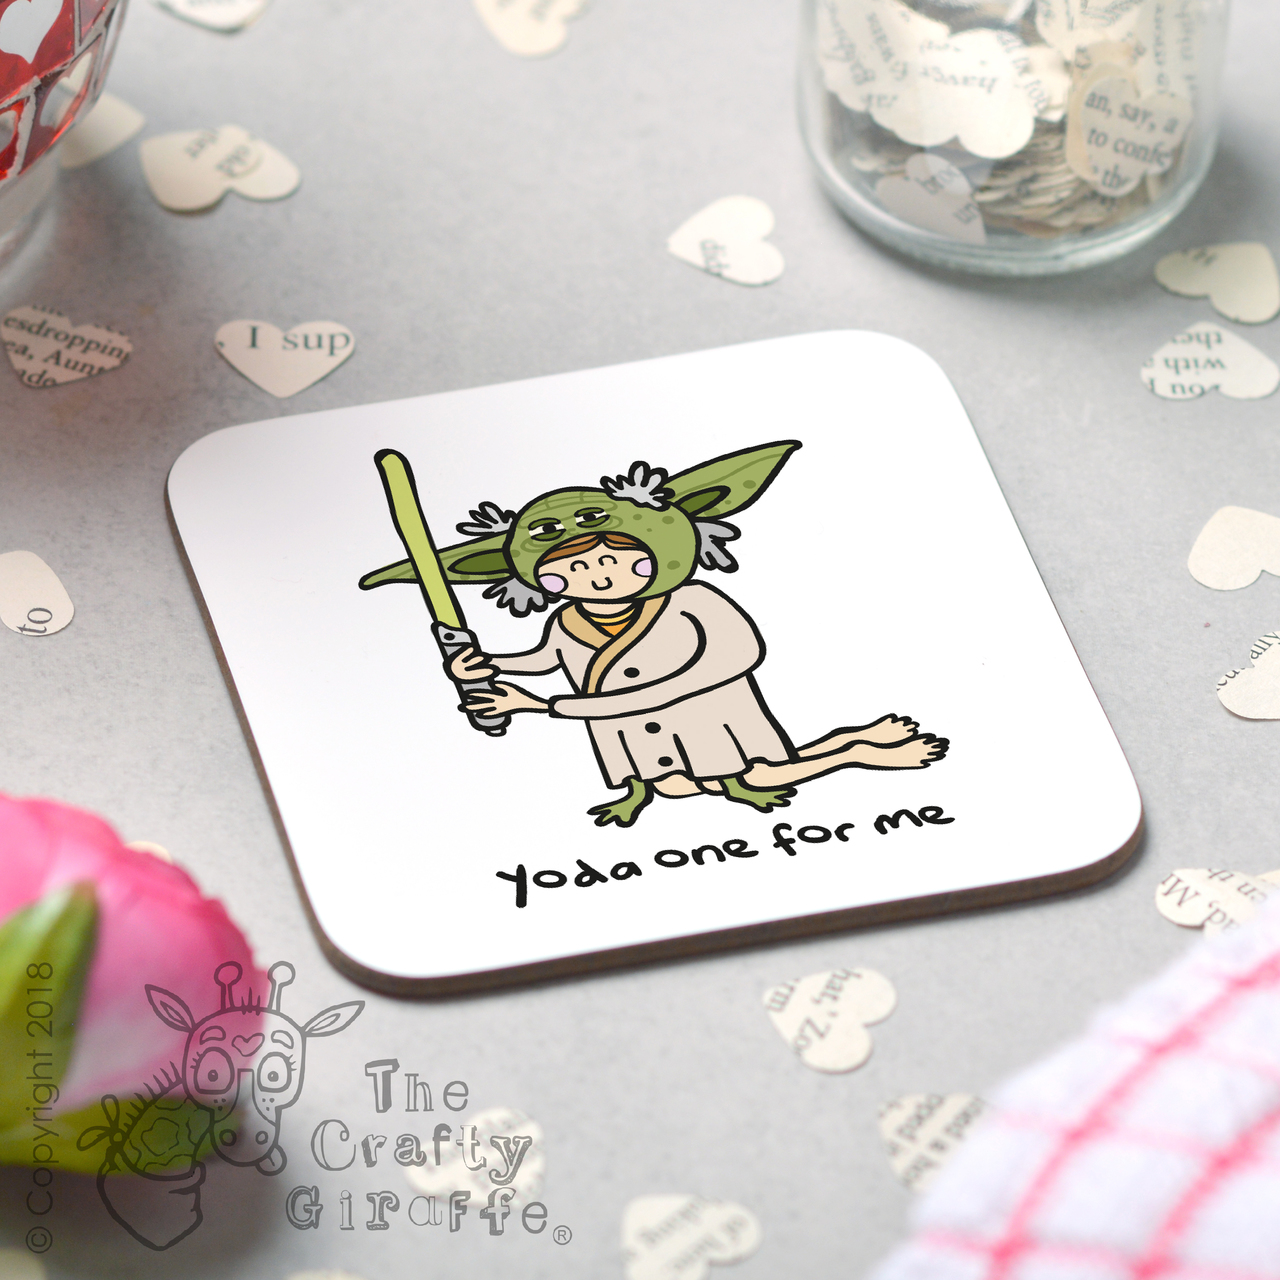 Yoda one for me Coaster